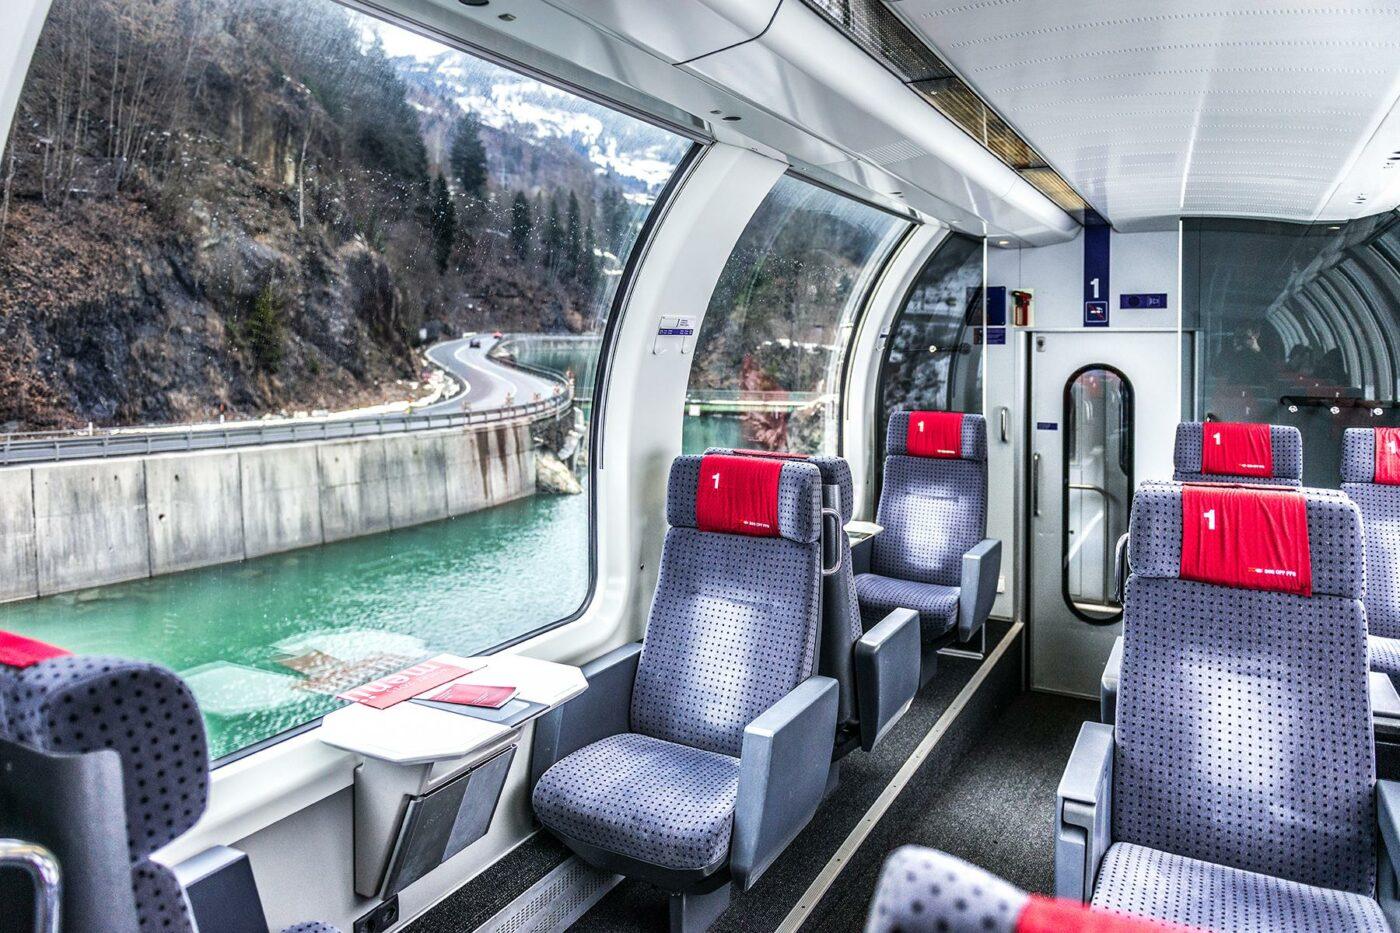 eurail travel disruption